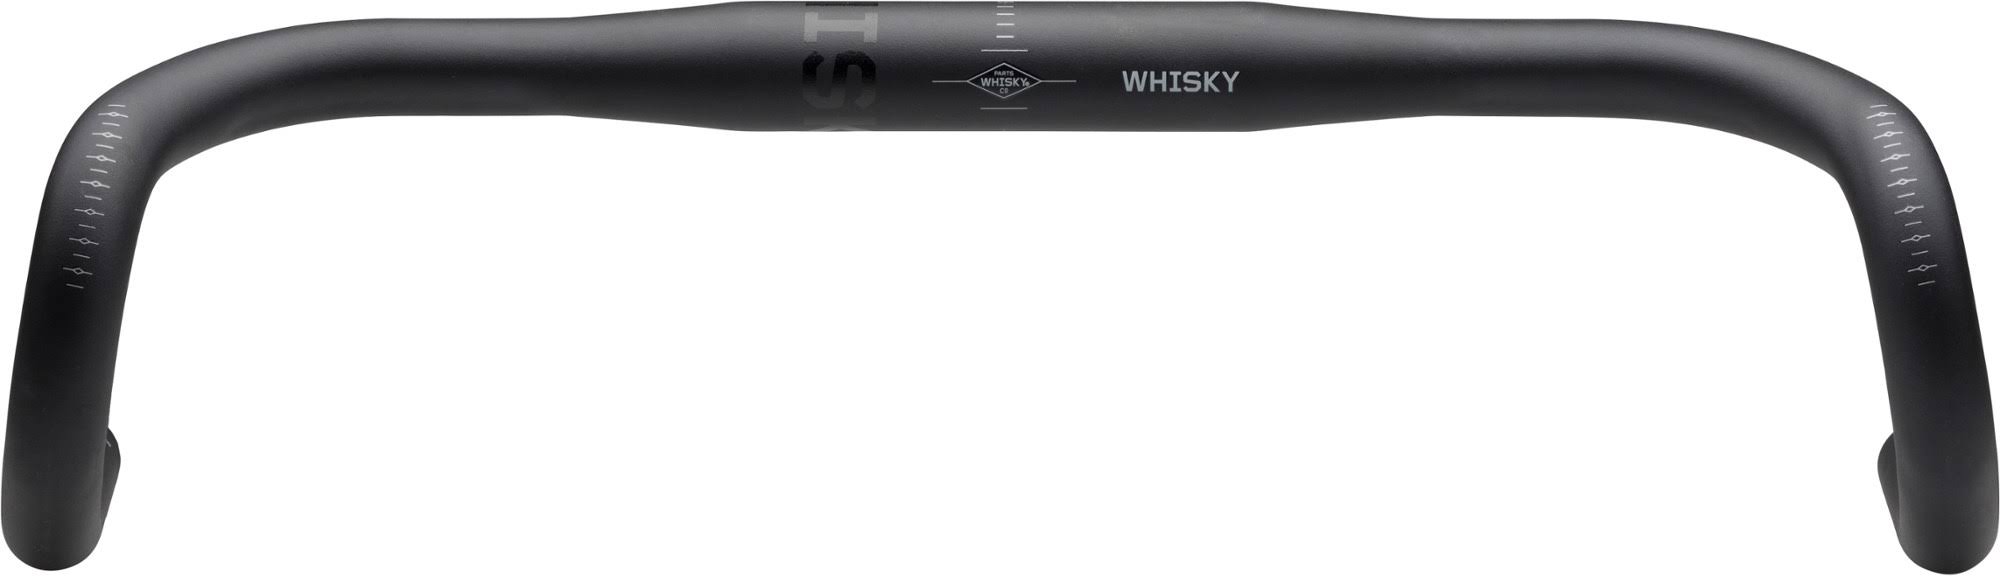 Whisky No 7 12F Alloy Drop Bar - 46cm, 12 Degree Flare, Matte Black